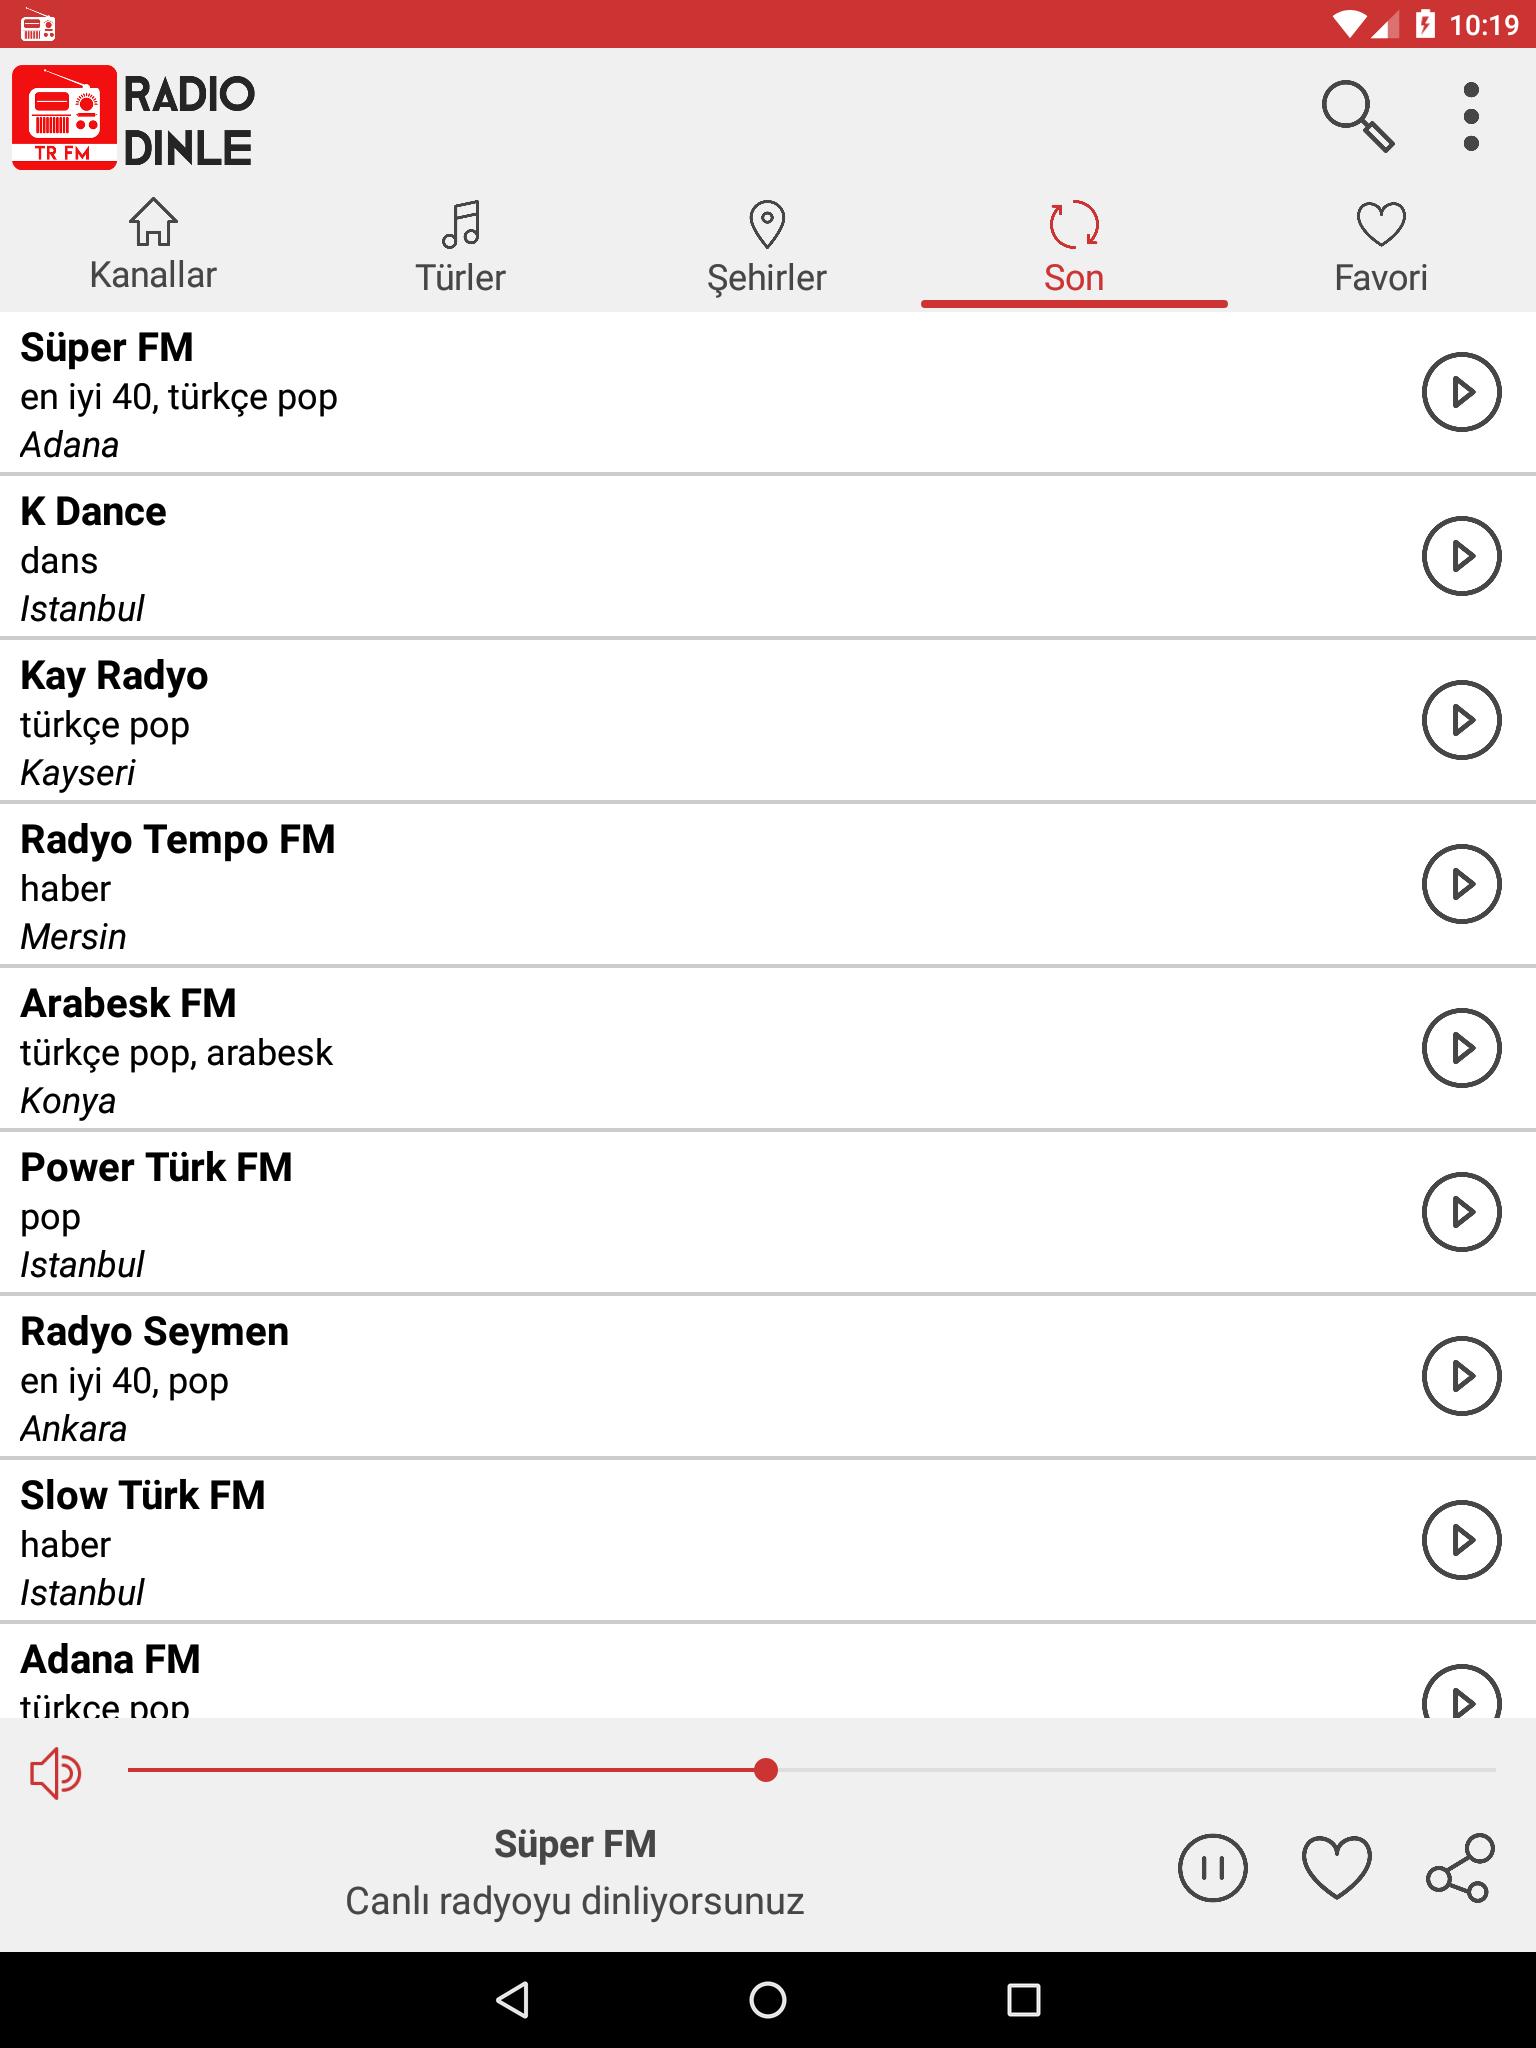 Canlı Radyo Dinle-FM Radyo-Ücretsiz Radyo Dinle for Android - APK Download